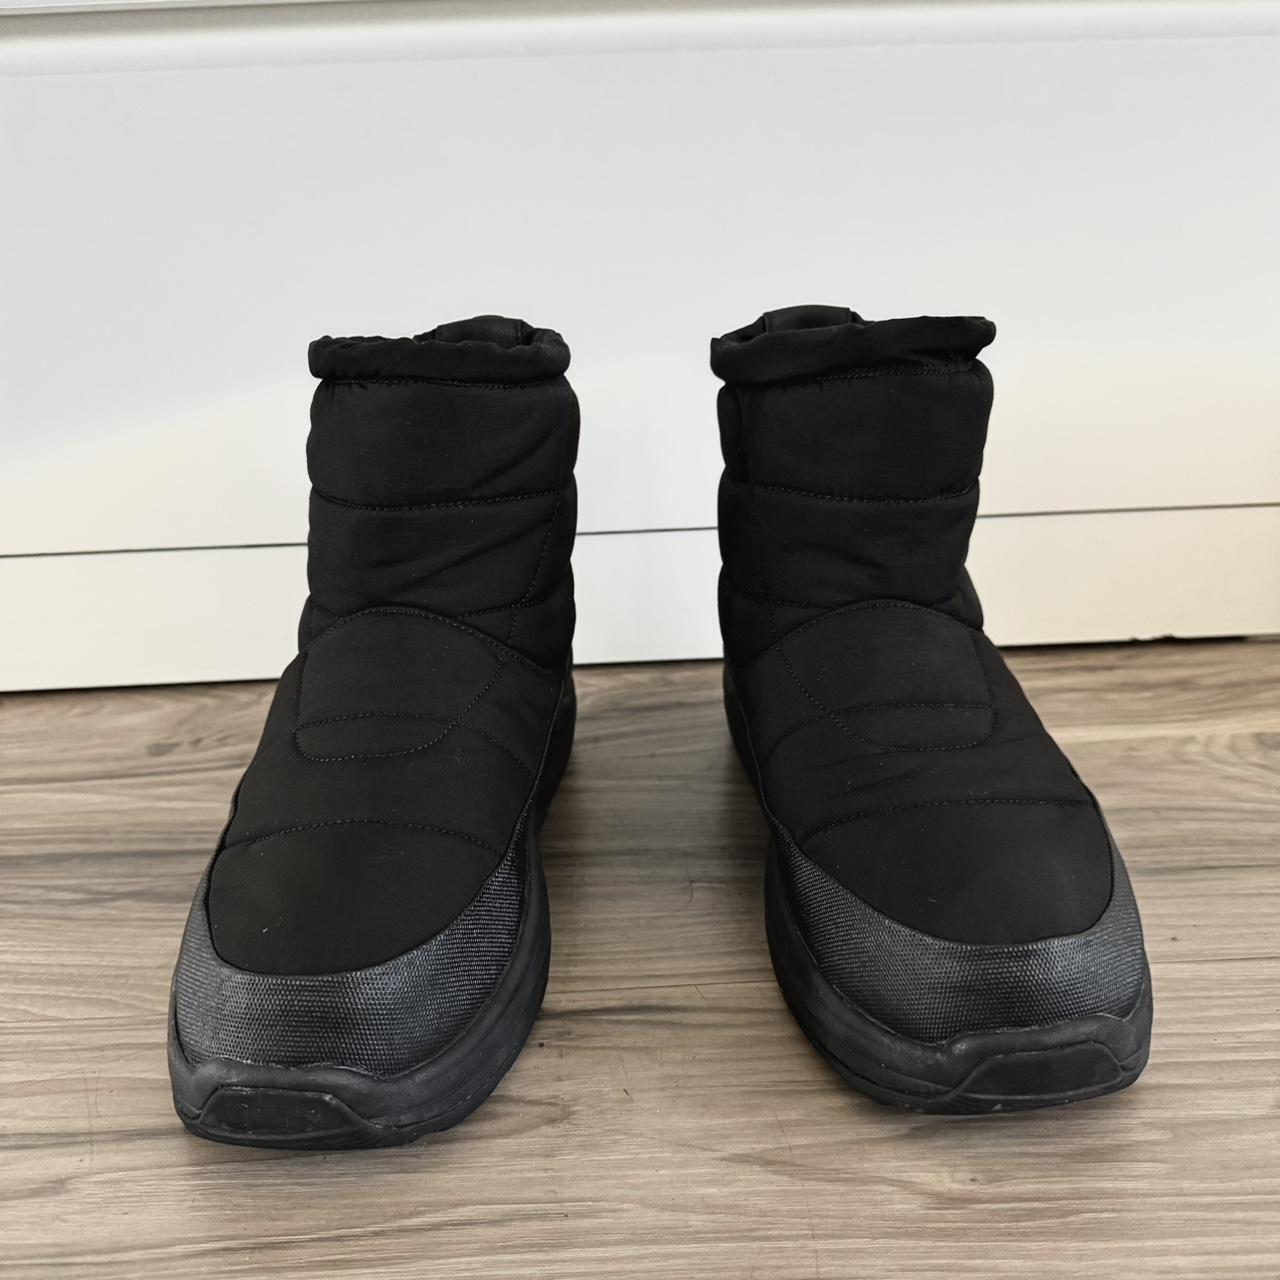 Suicoke Down boots, Puffer boots, lightly worn - Depop